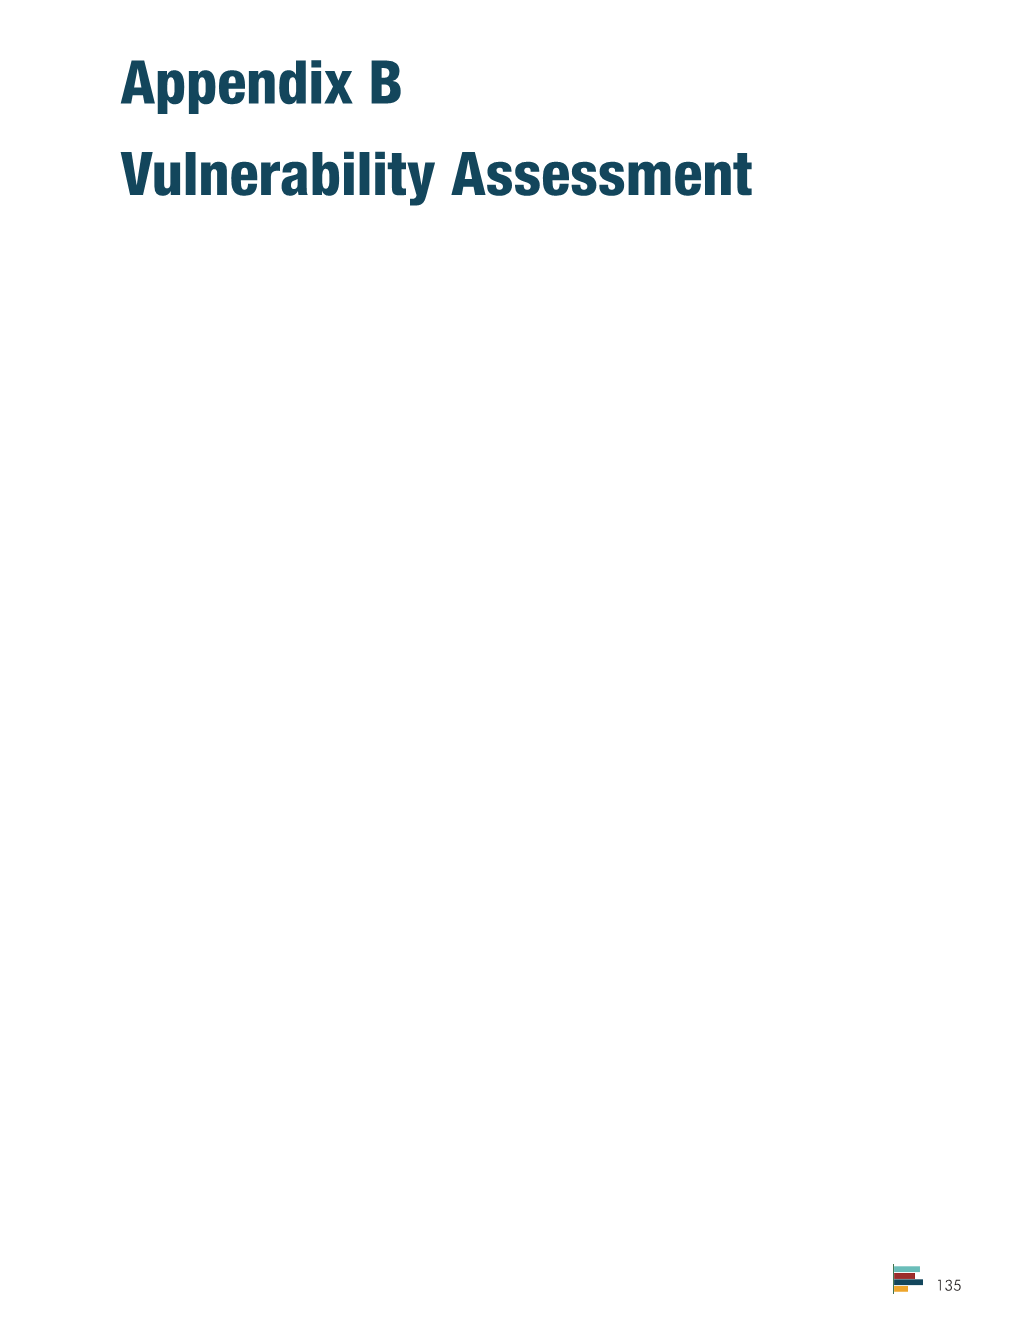 Appendix B Vulnerability Assessment